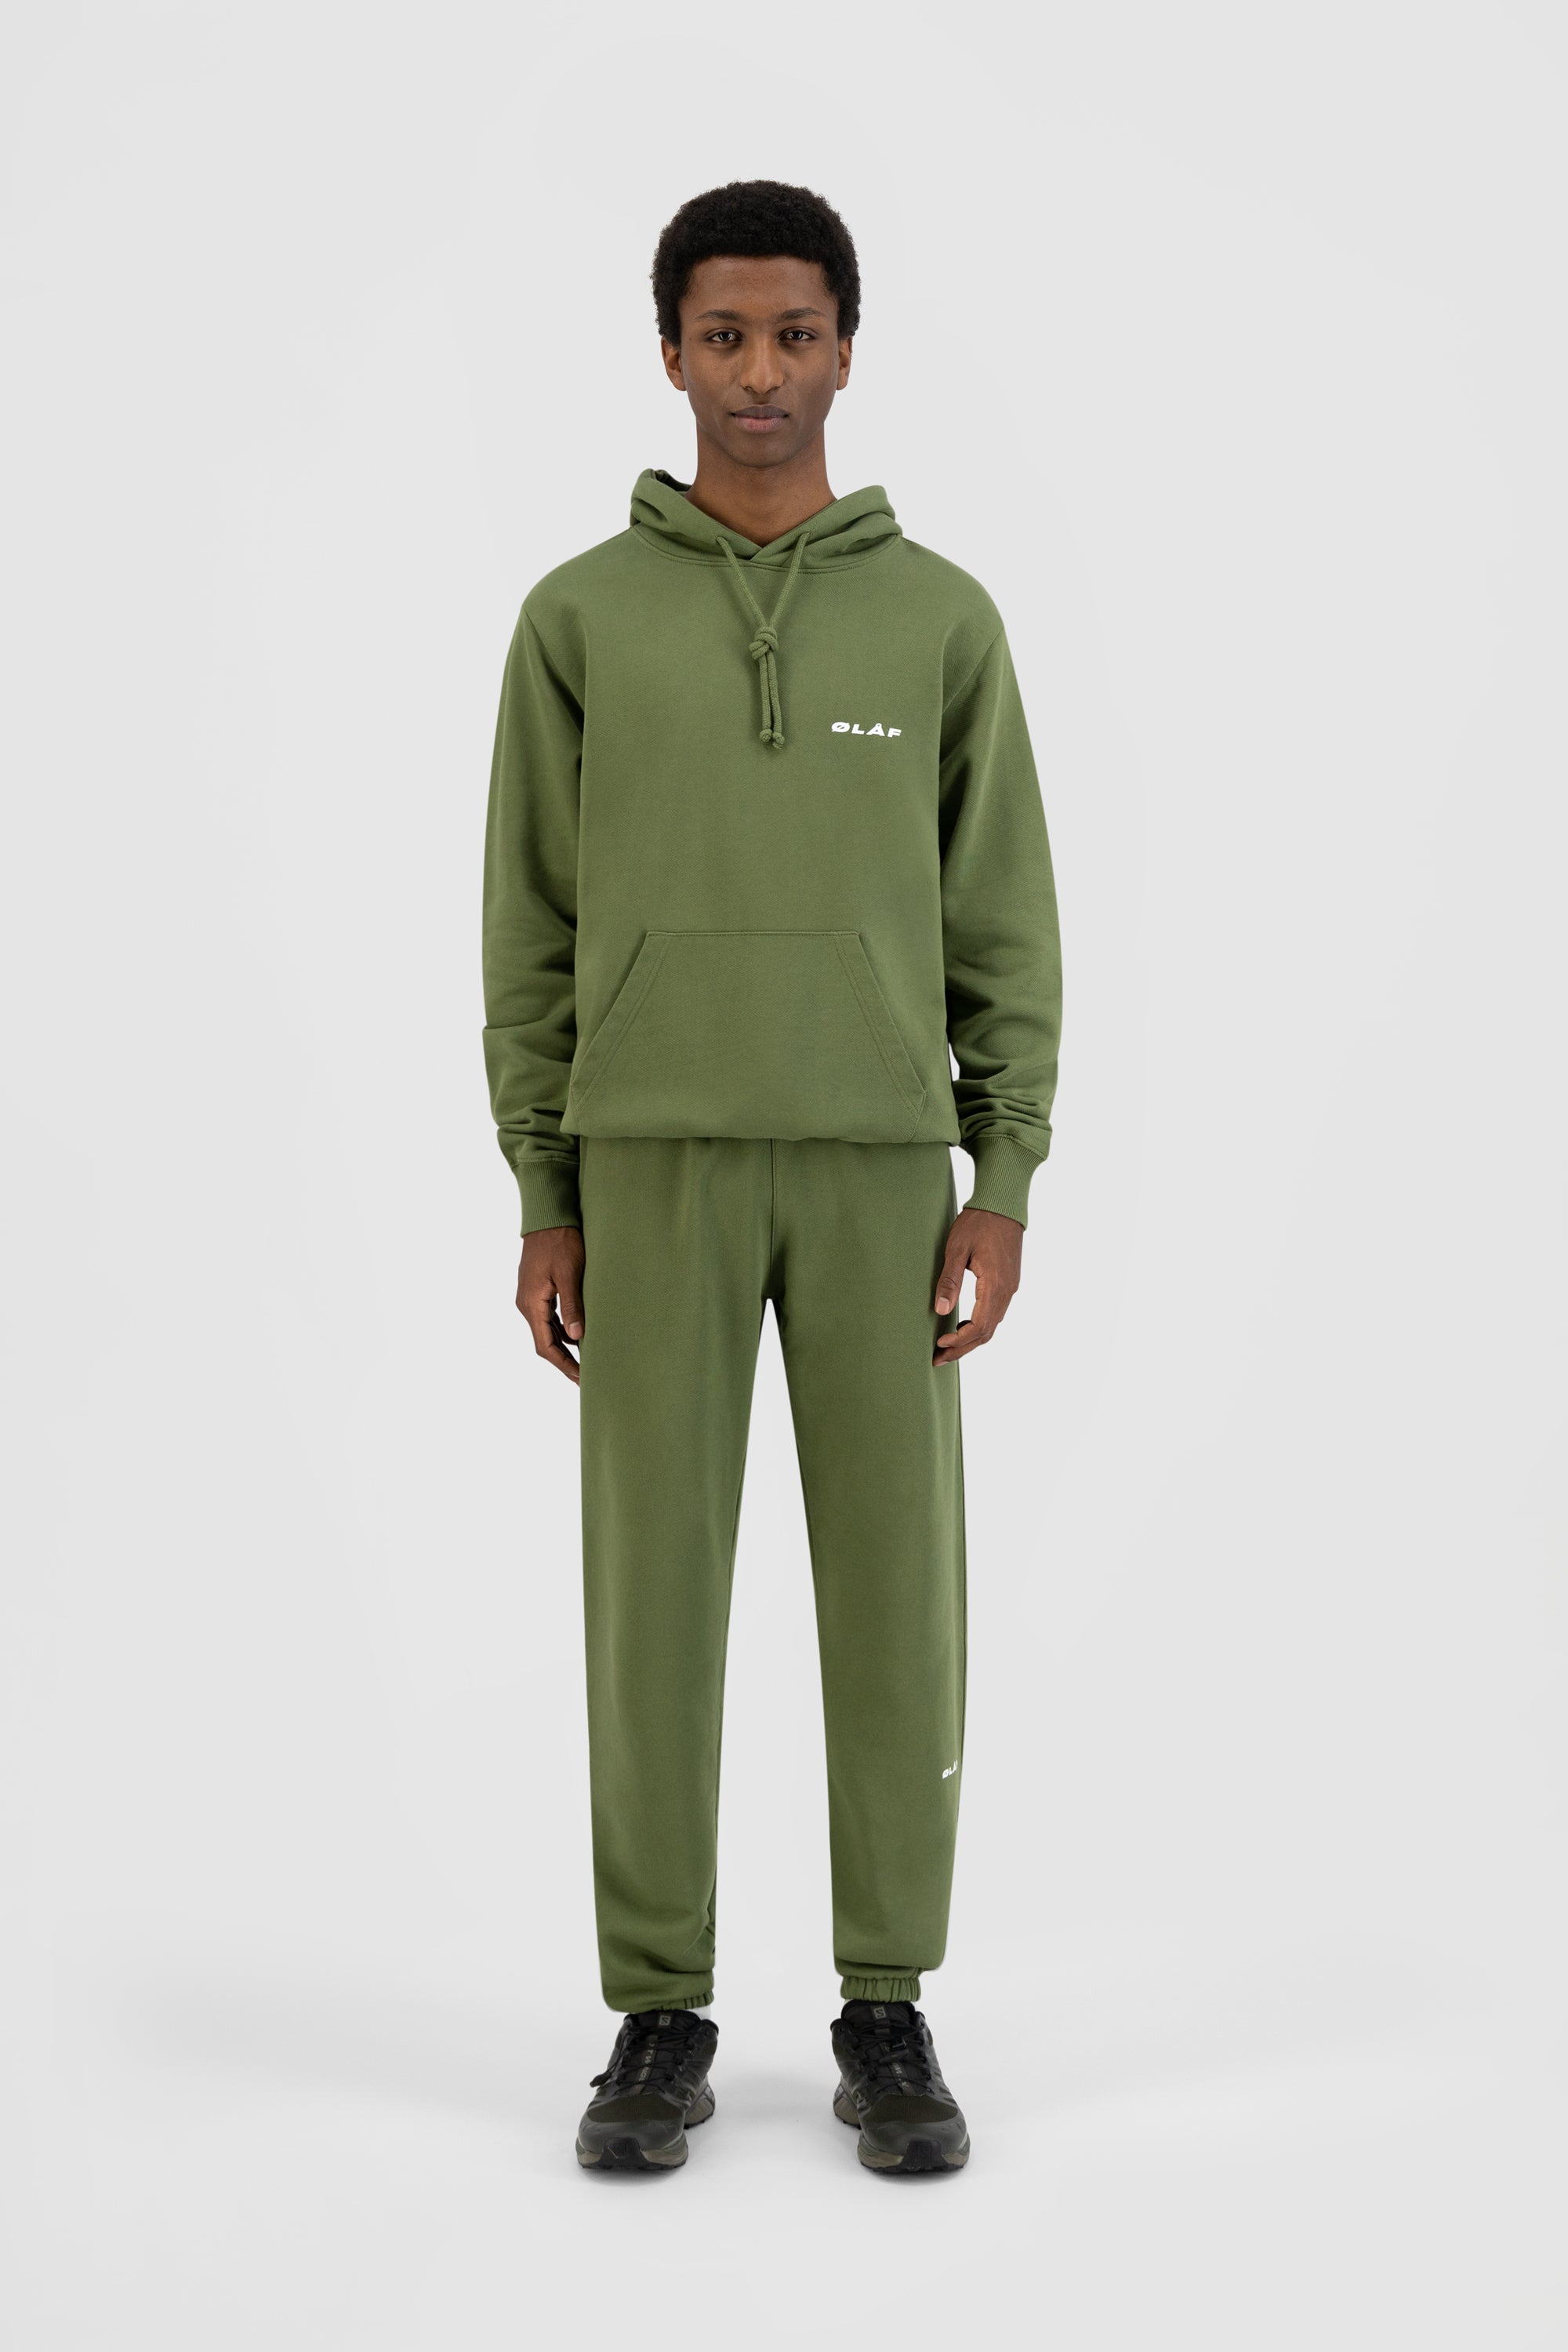 ØLÅF Uniform Sweatpants - Army Green